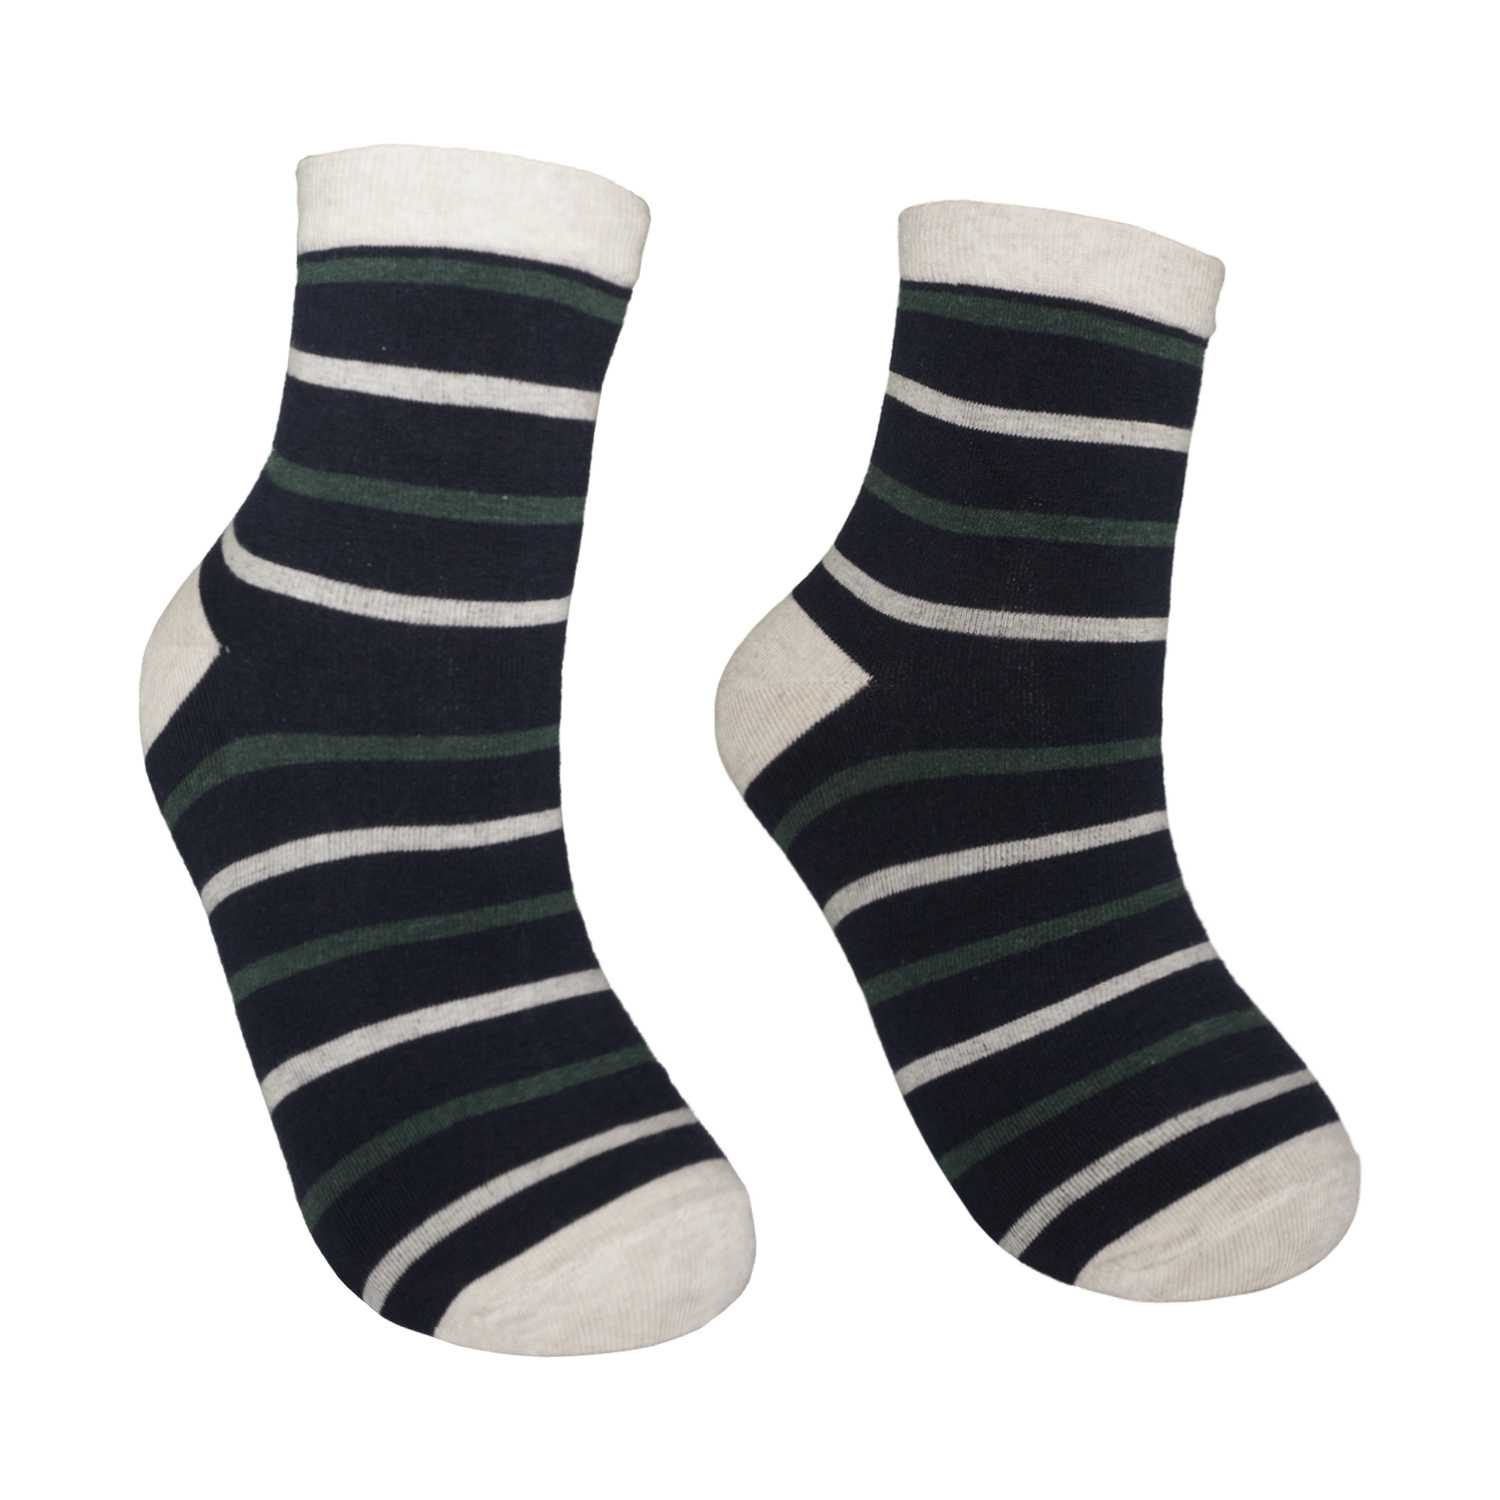 Men's Wide Stripe Design Fashion Crew Socks - Zestique